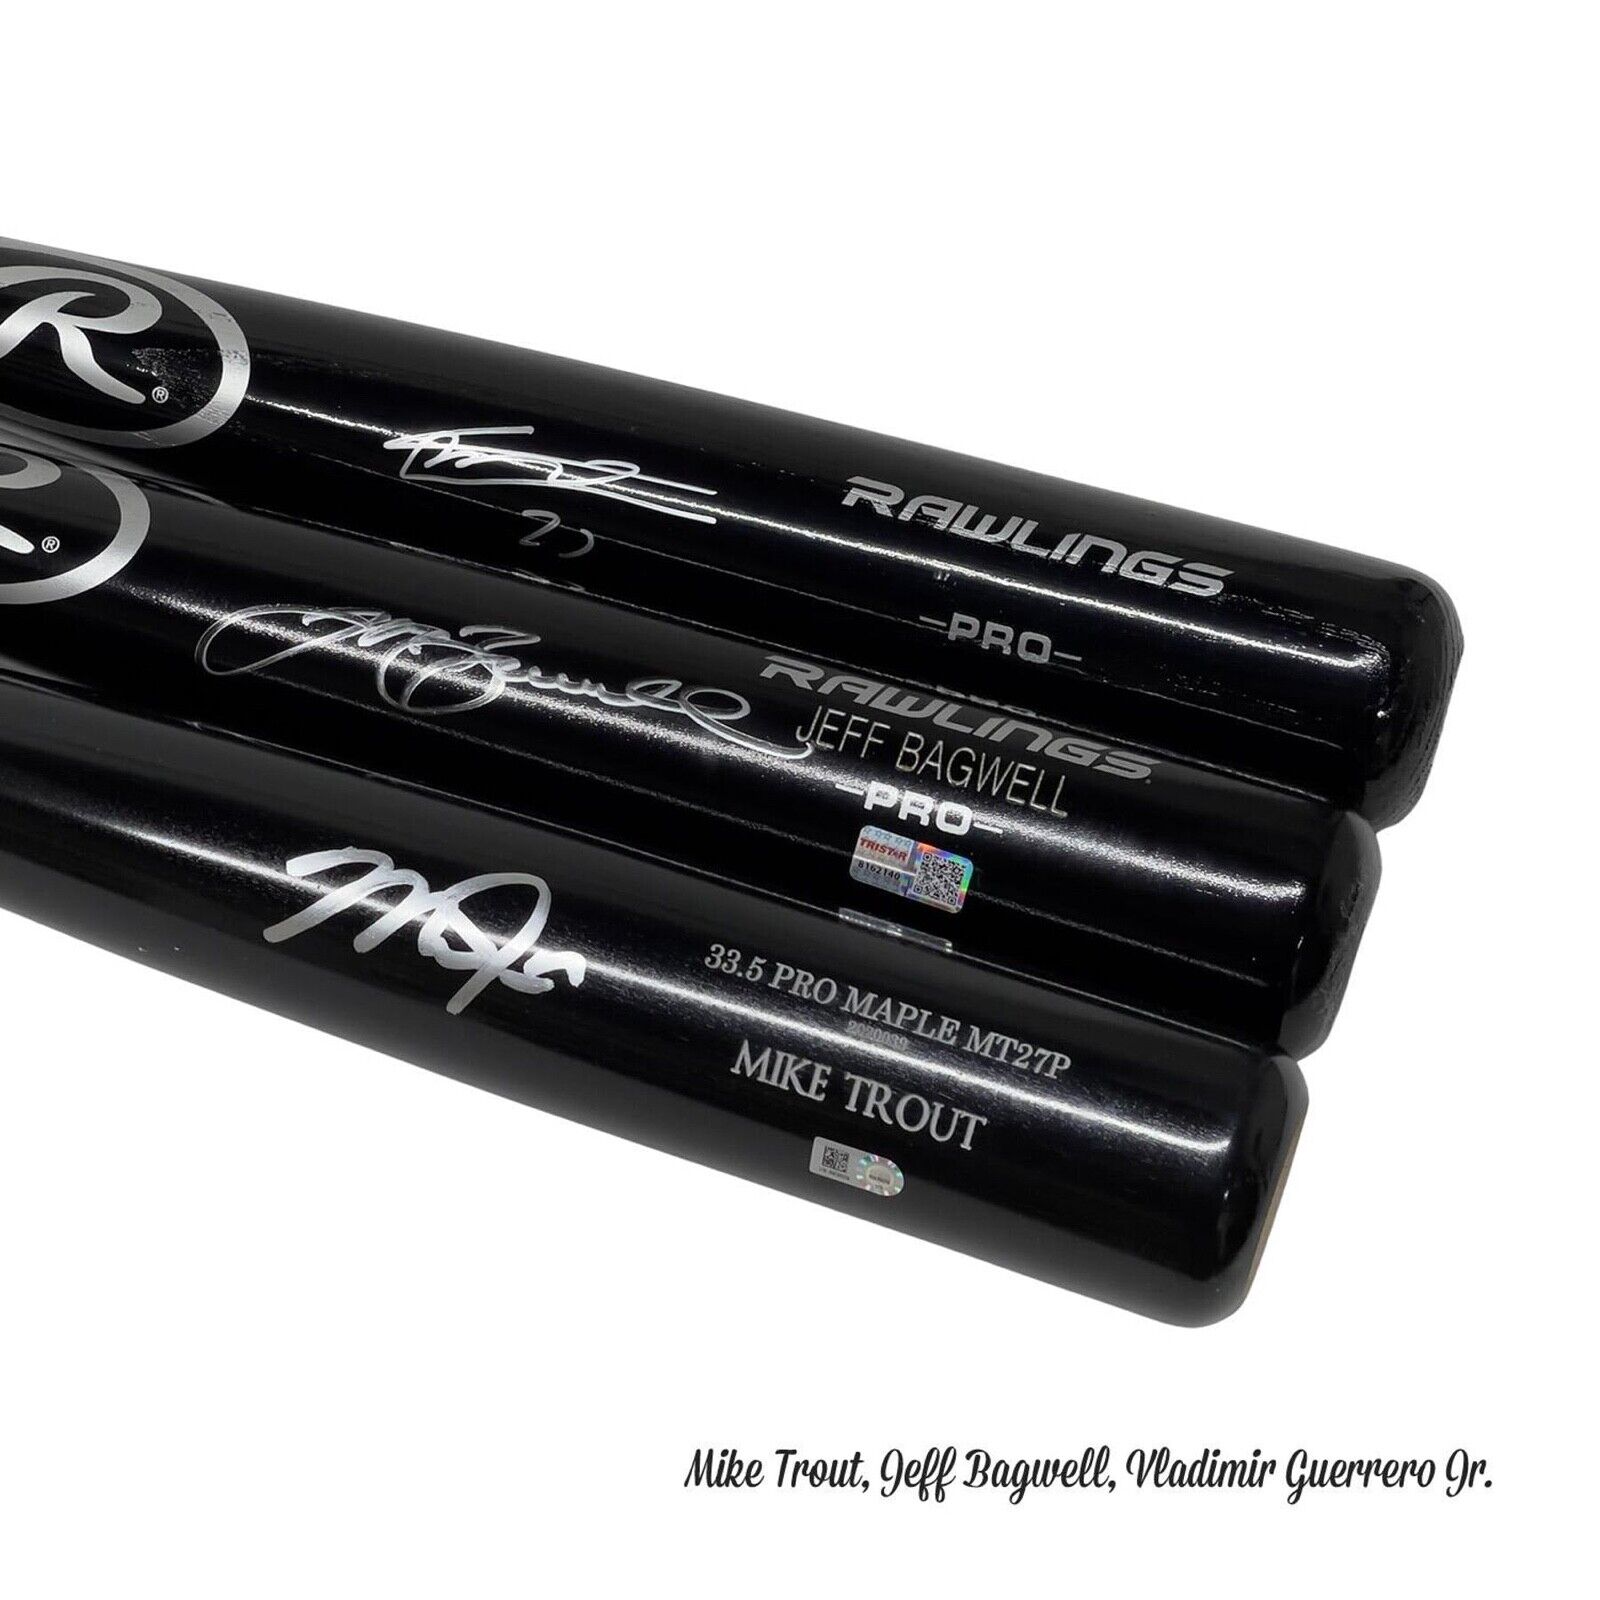 TAMPA BAY RAYS HitParade Autographed Baseball Bat S15 - Live Break 1box